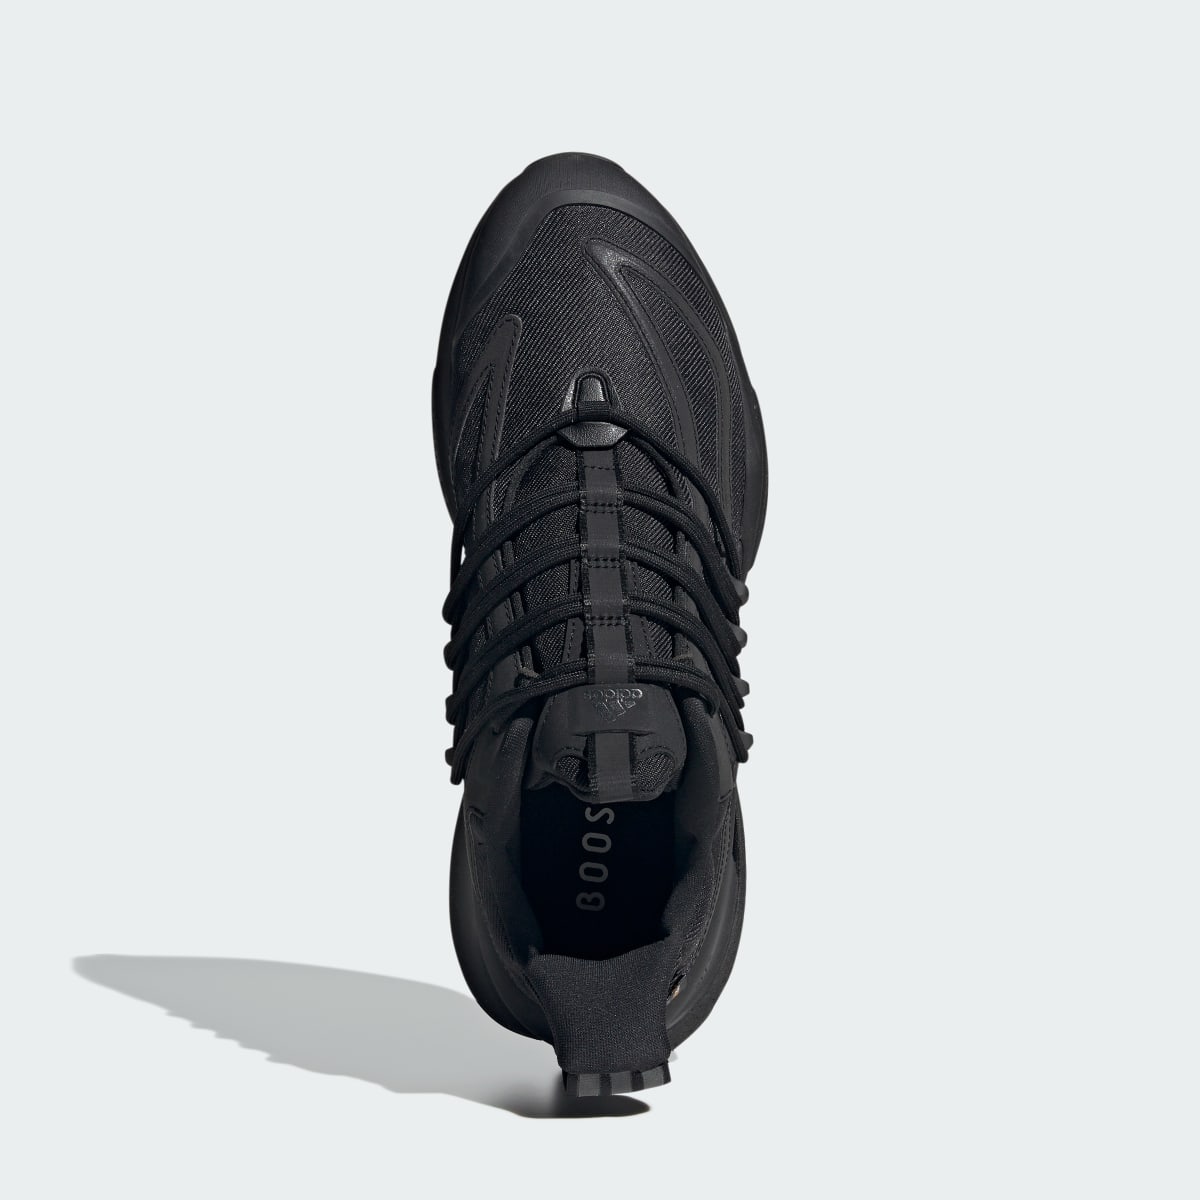 Adidas Alphaboost V1 Shoes. 9